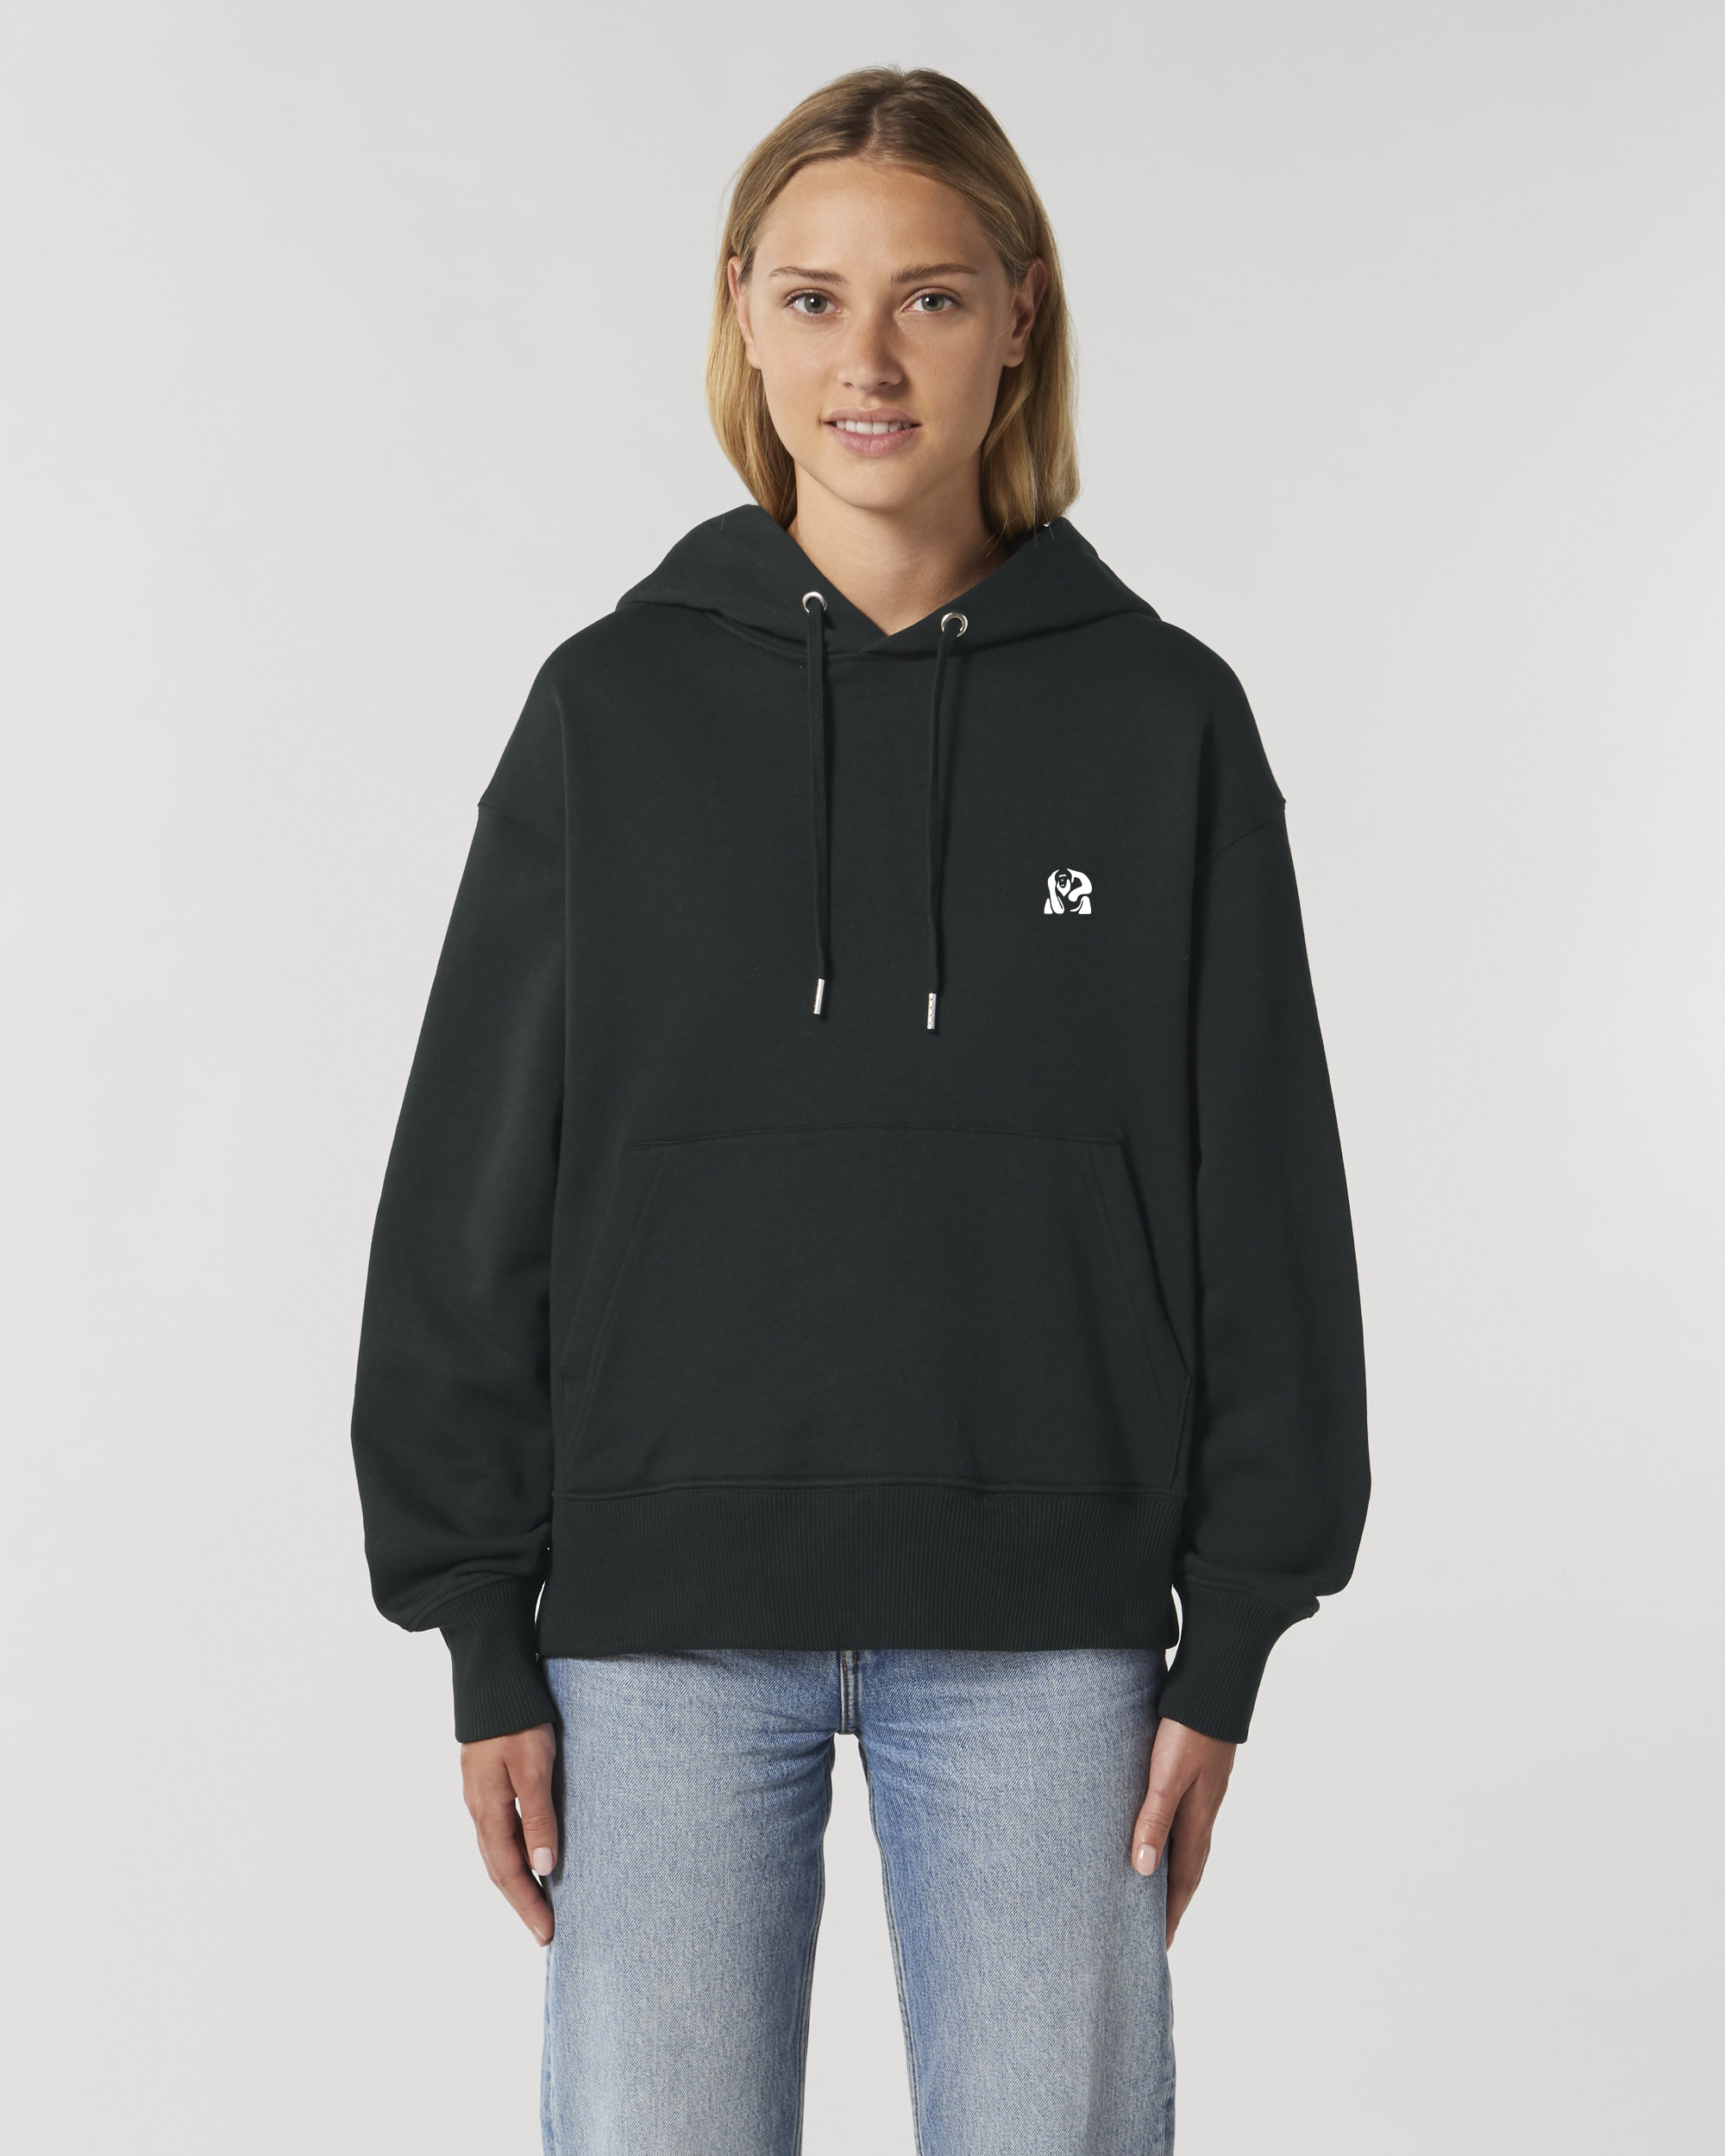 Thick organic cotton unisex hoodie - Kilimanjaro